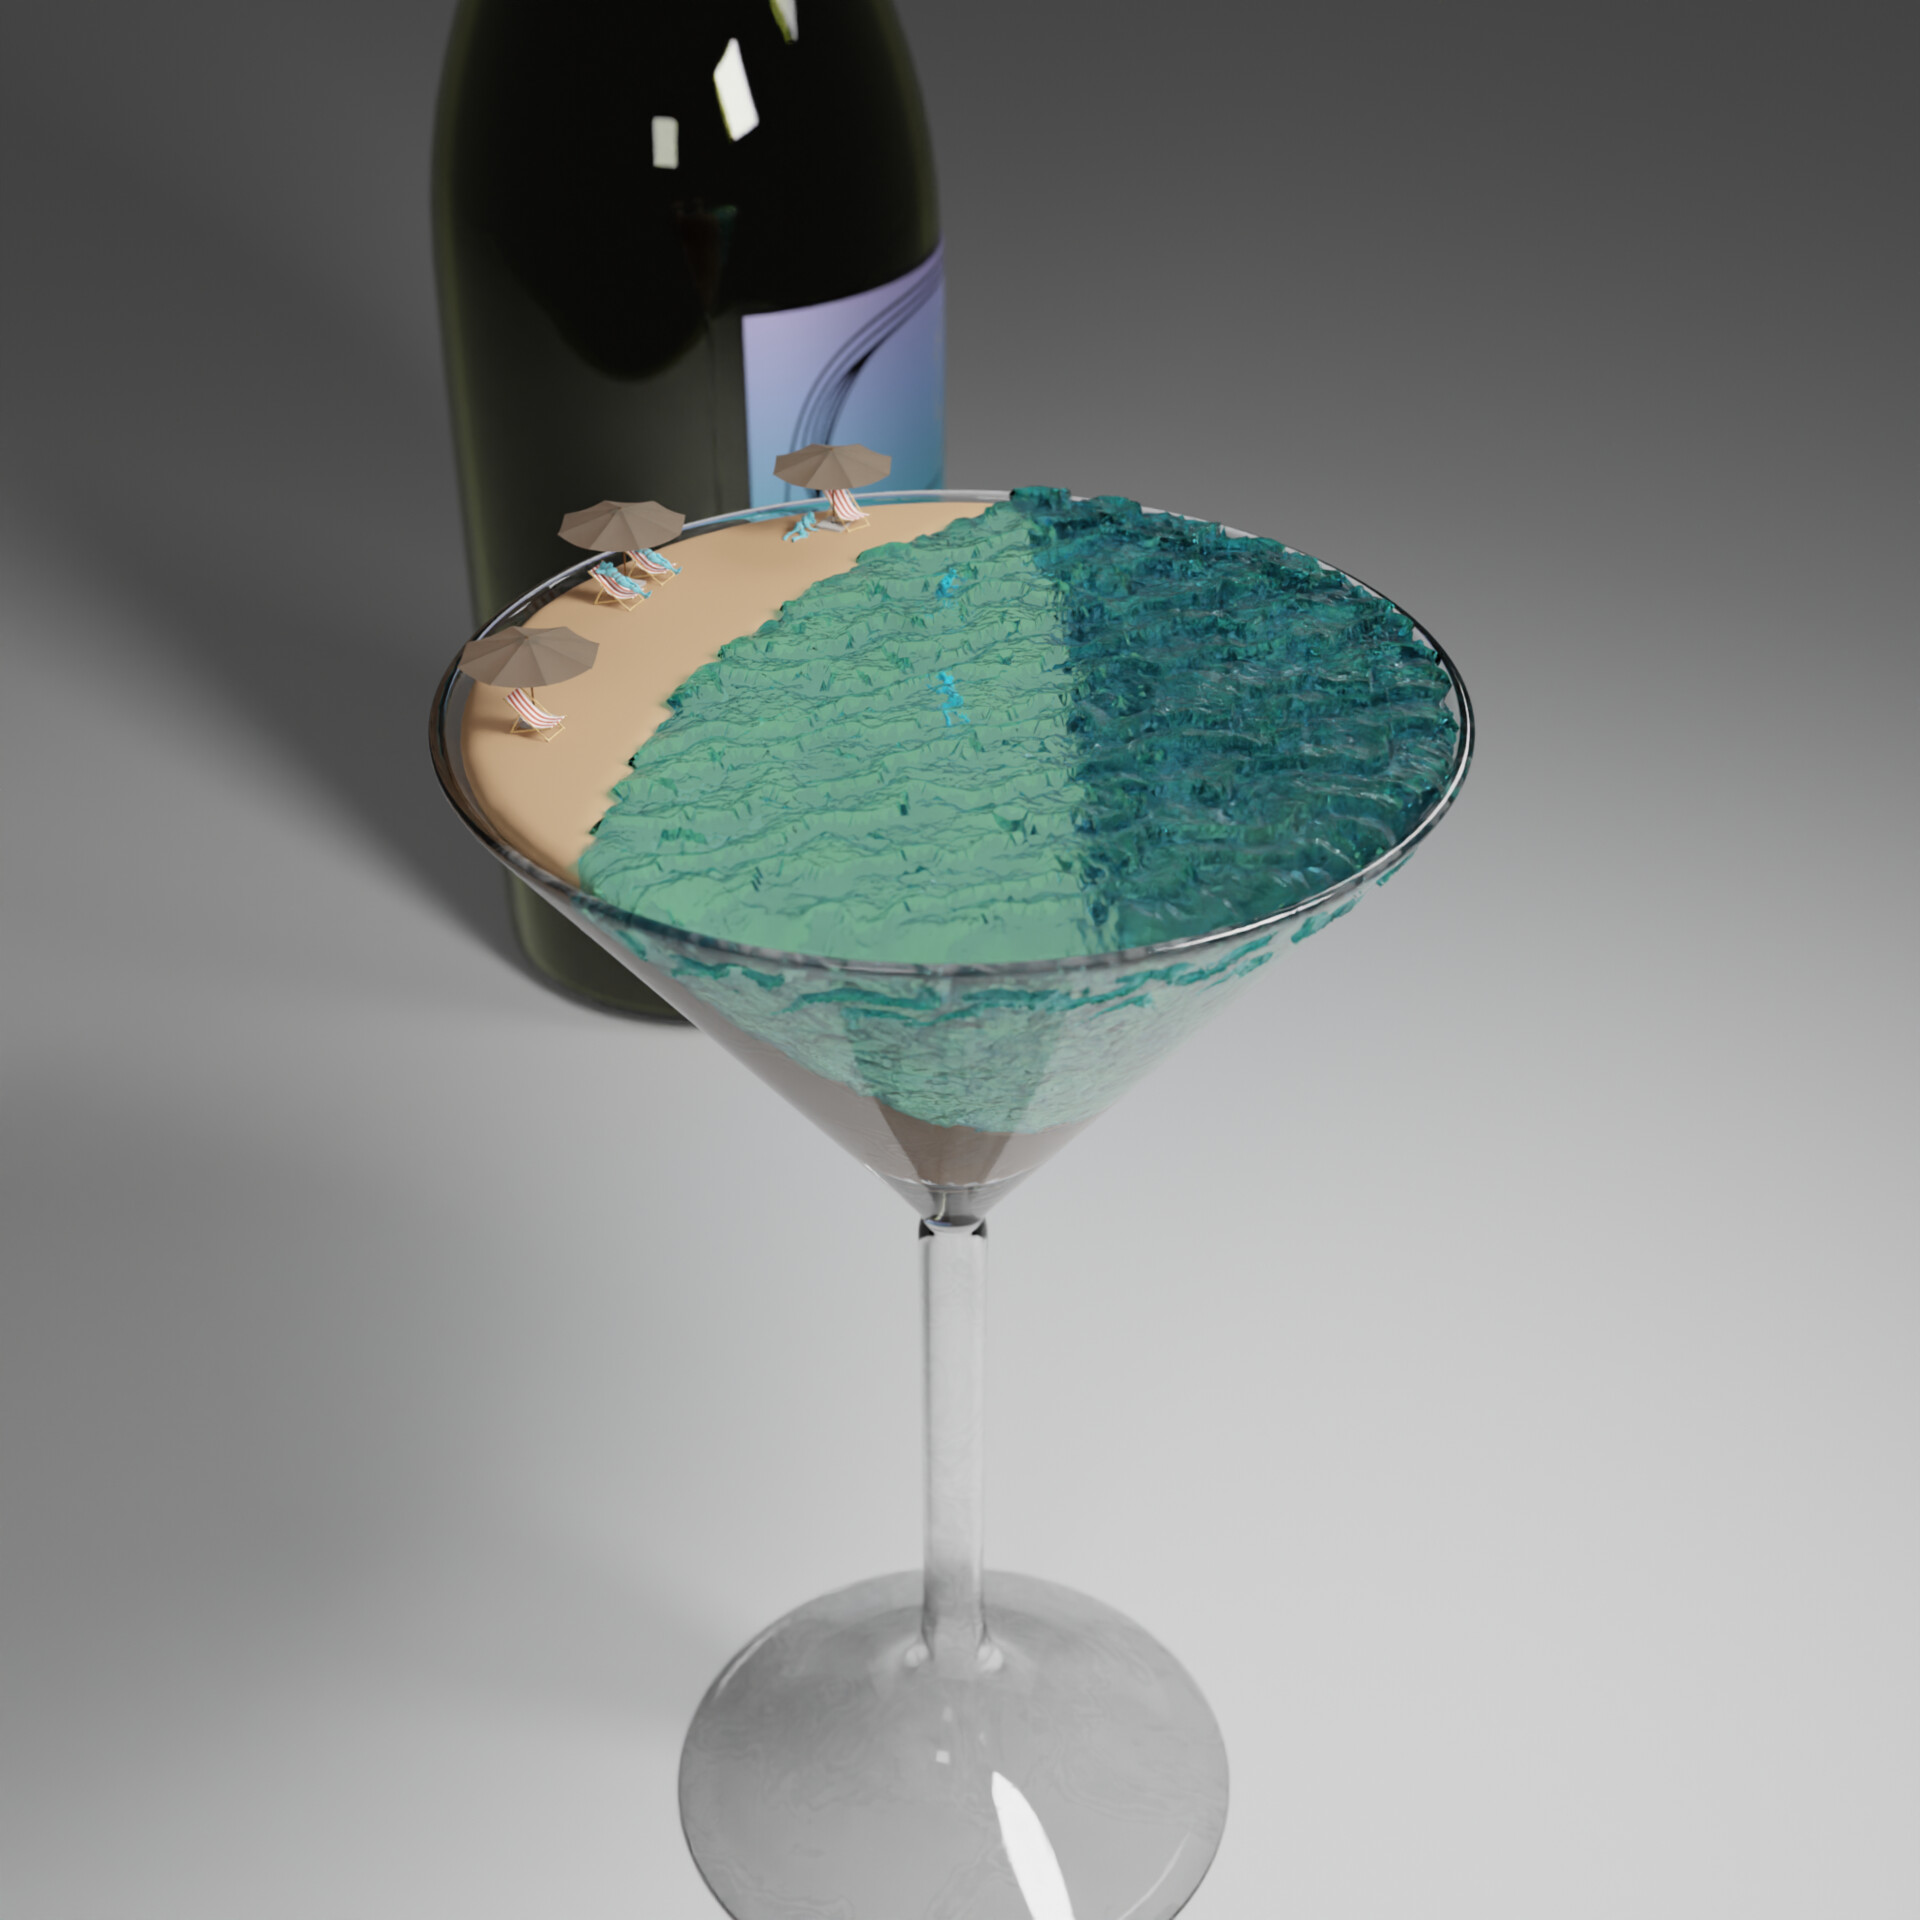 Giant Martini Glass Centerpiece